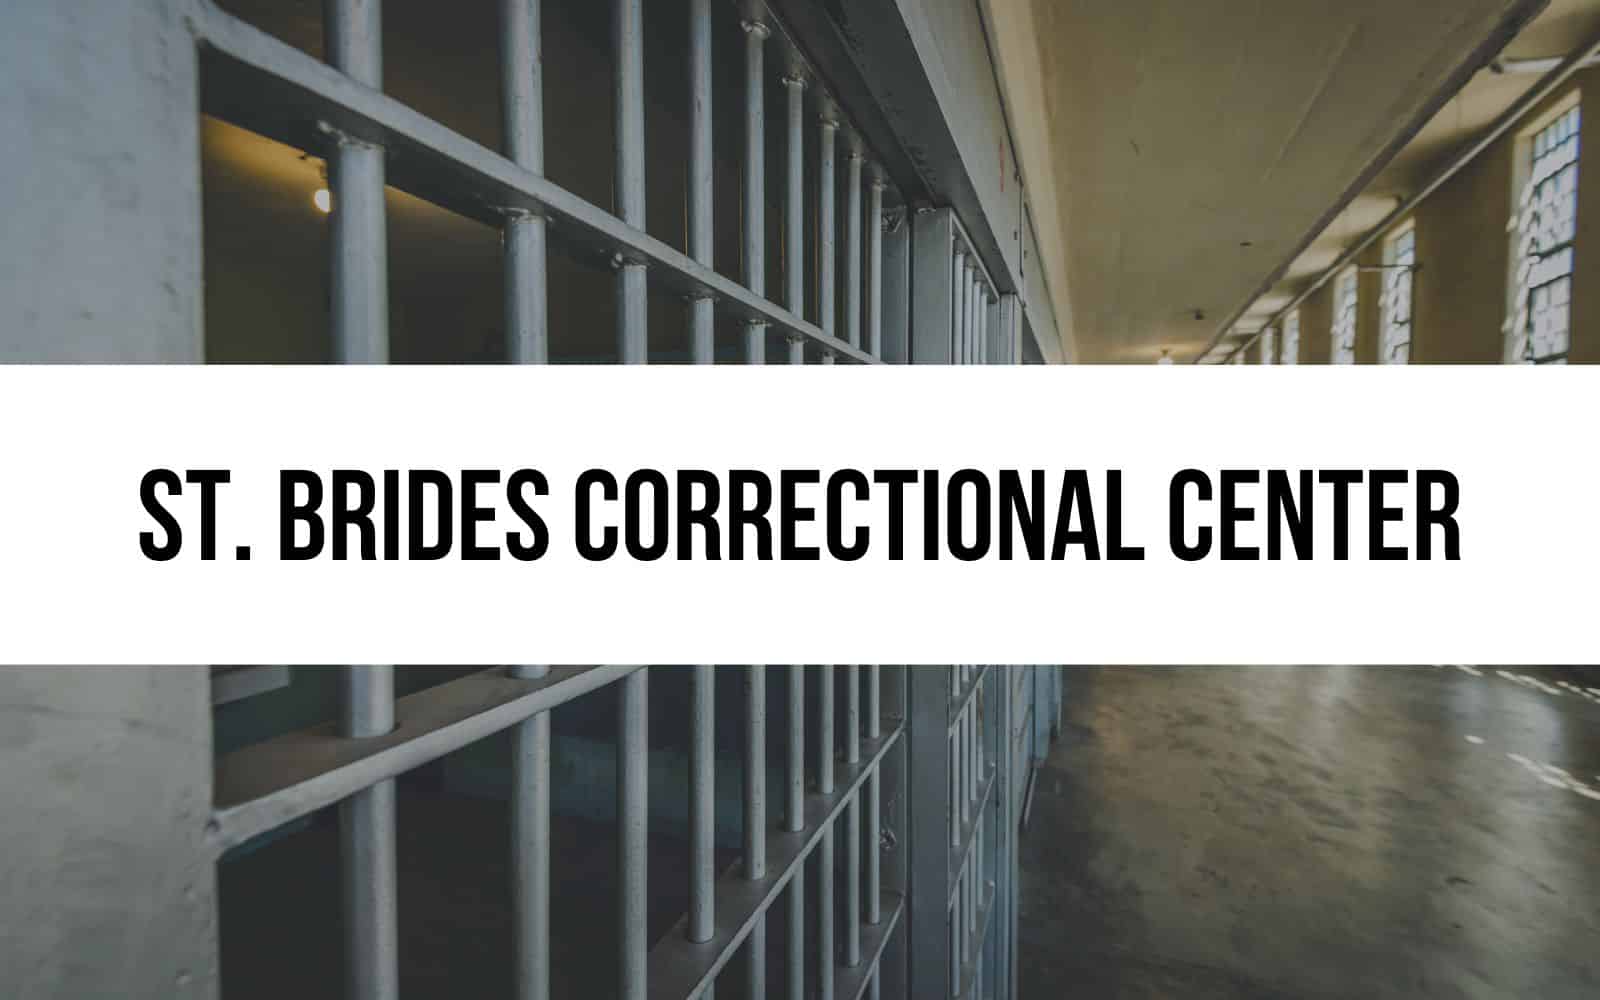 St. Brides Correctional Center